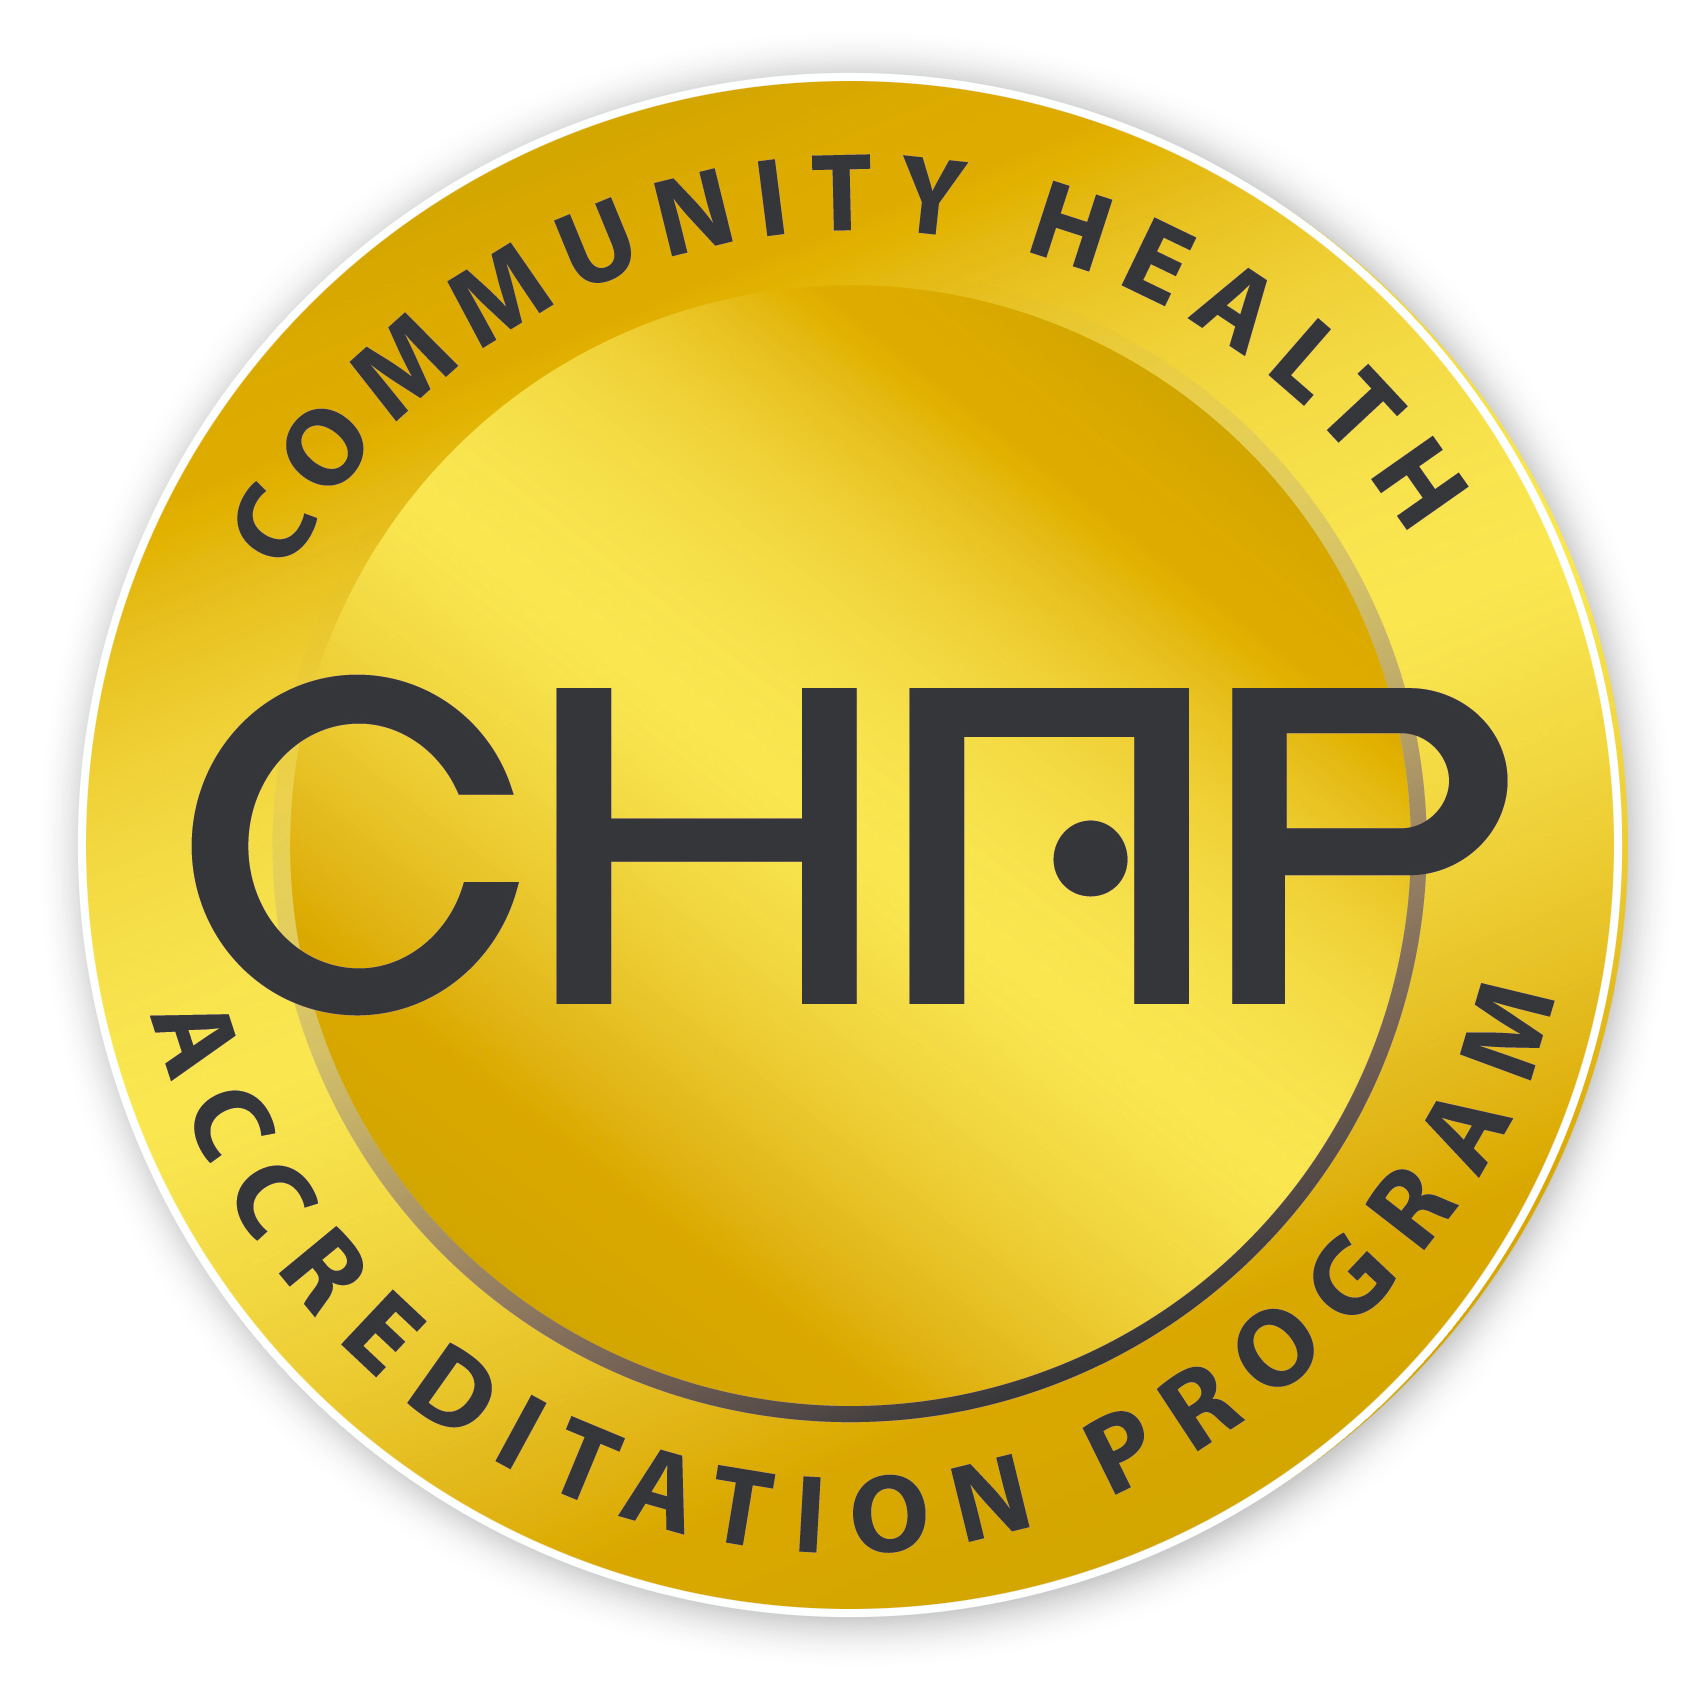 Community Health Accreditation Program Logo